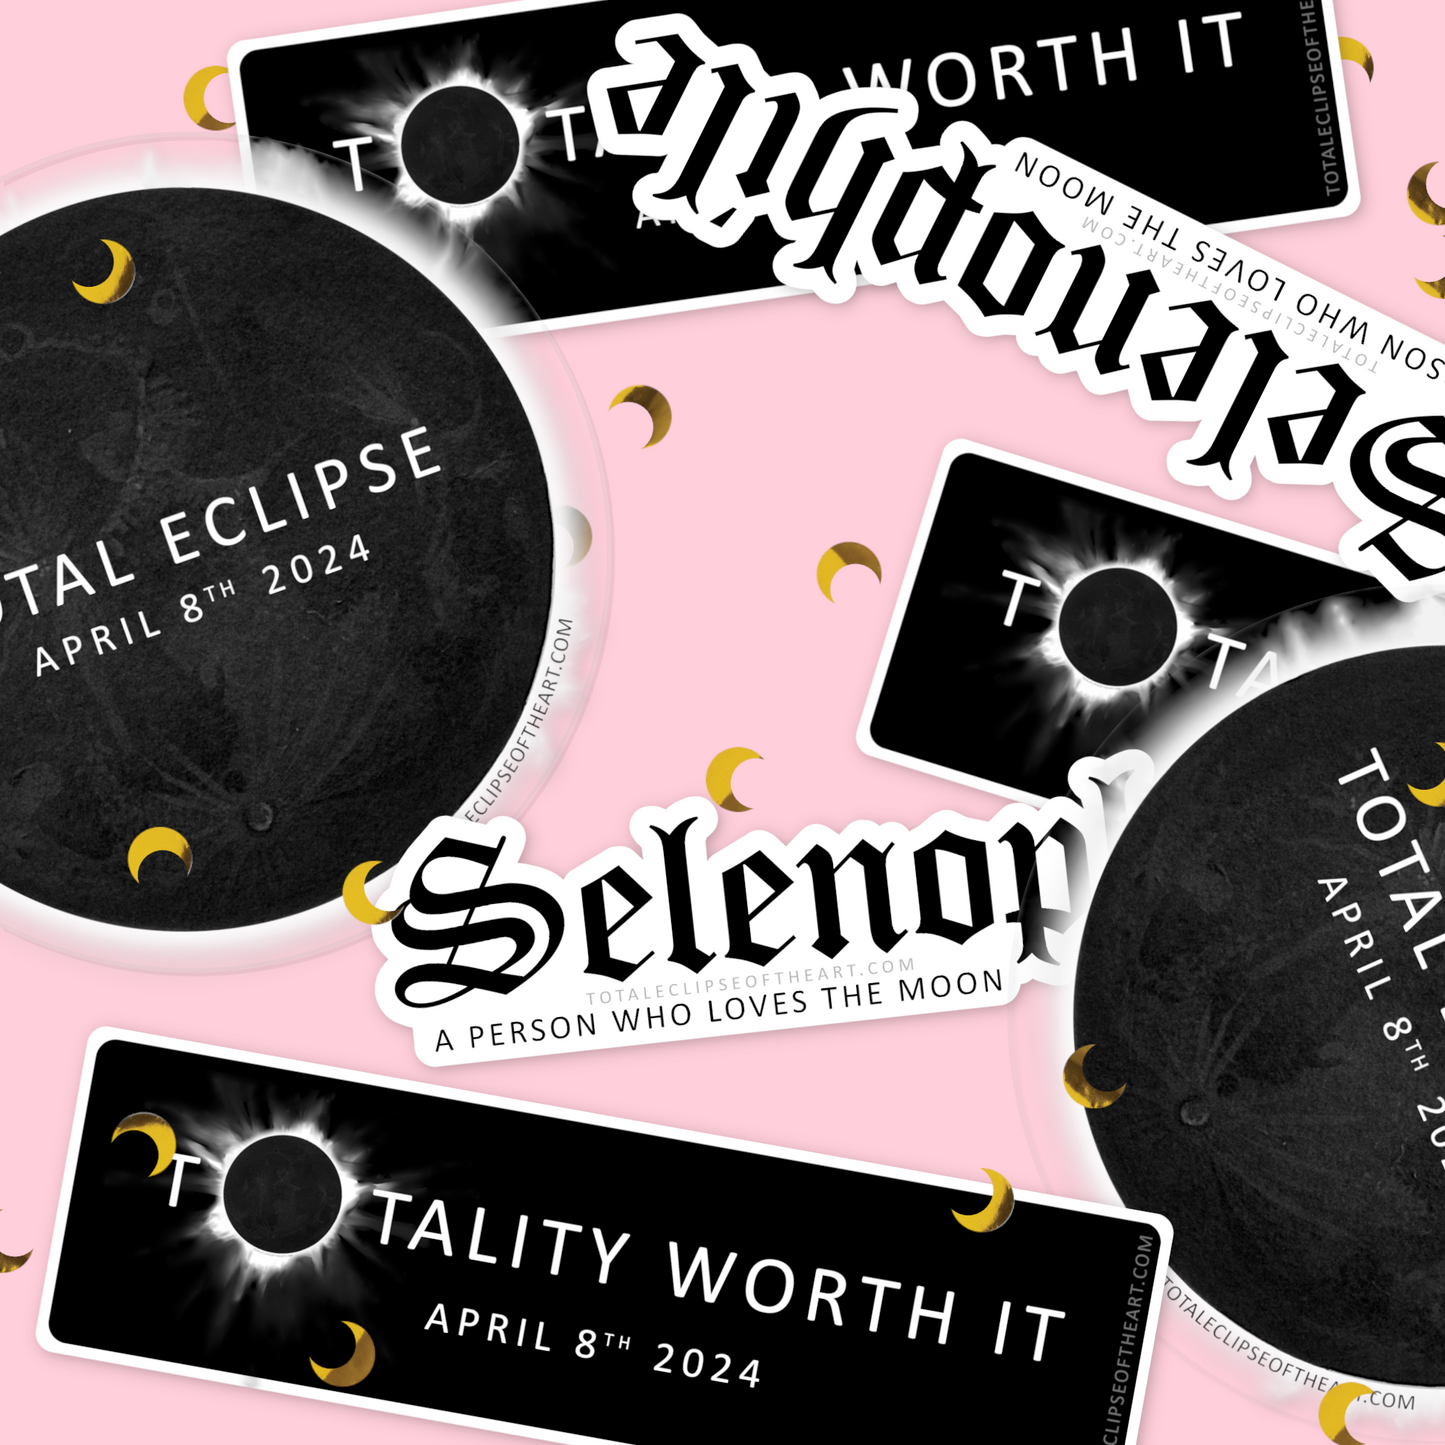 Solar Eclipse DATELESS Moon Sticker